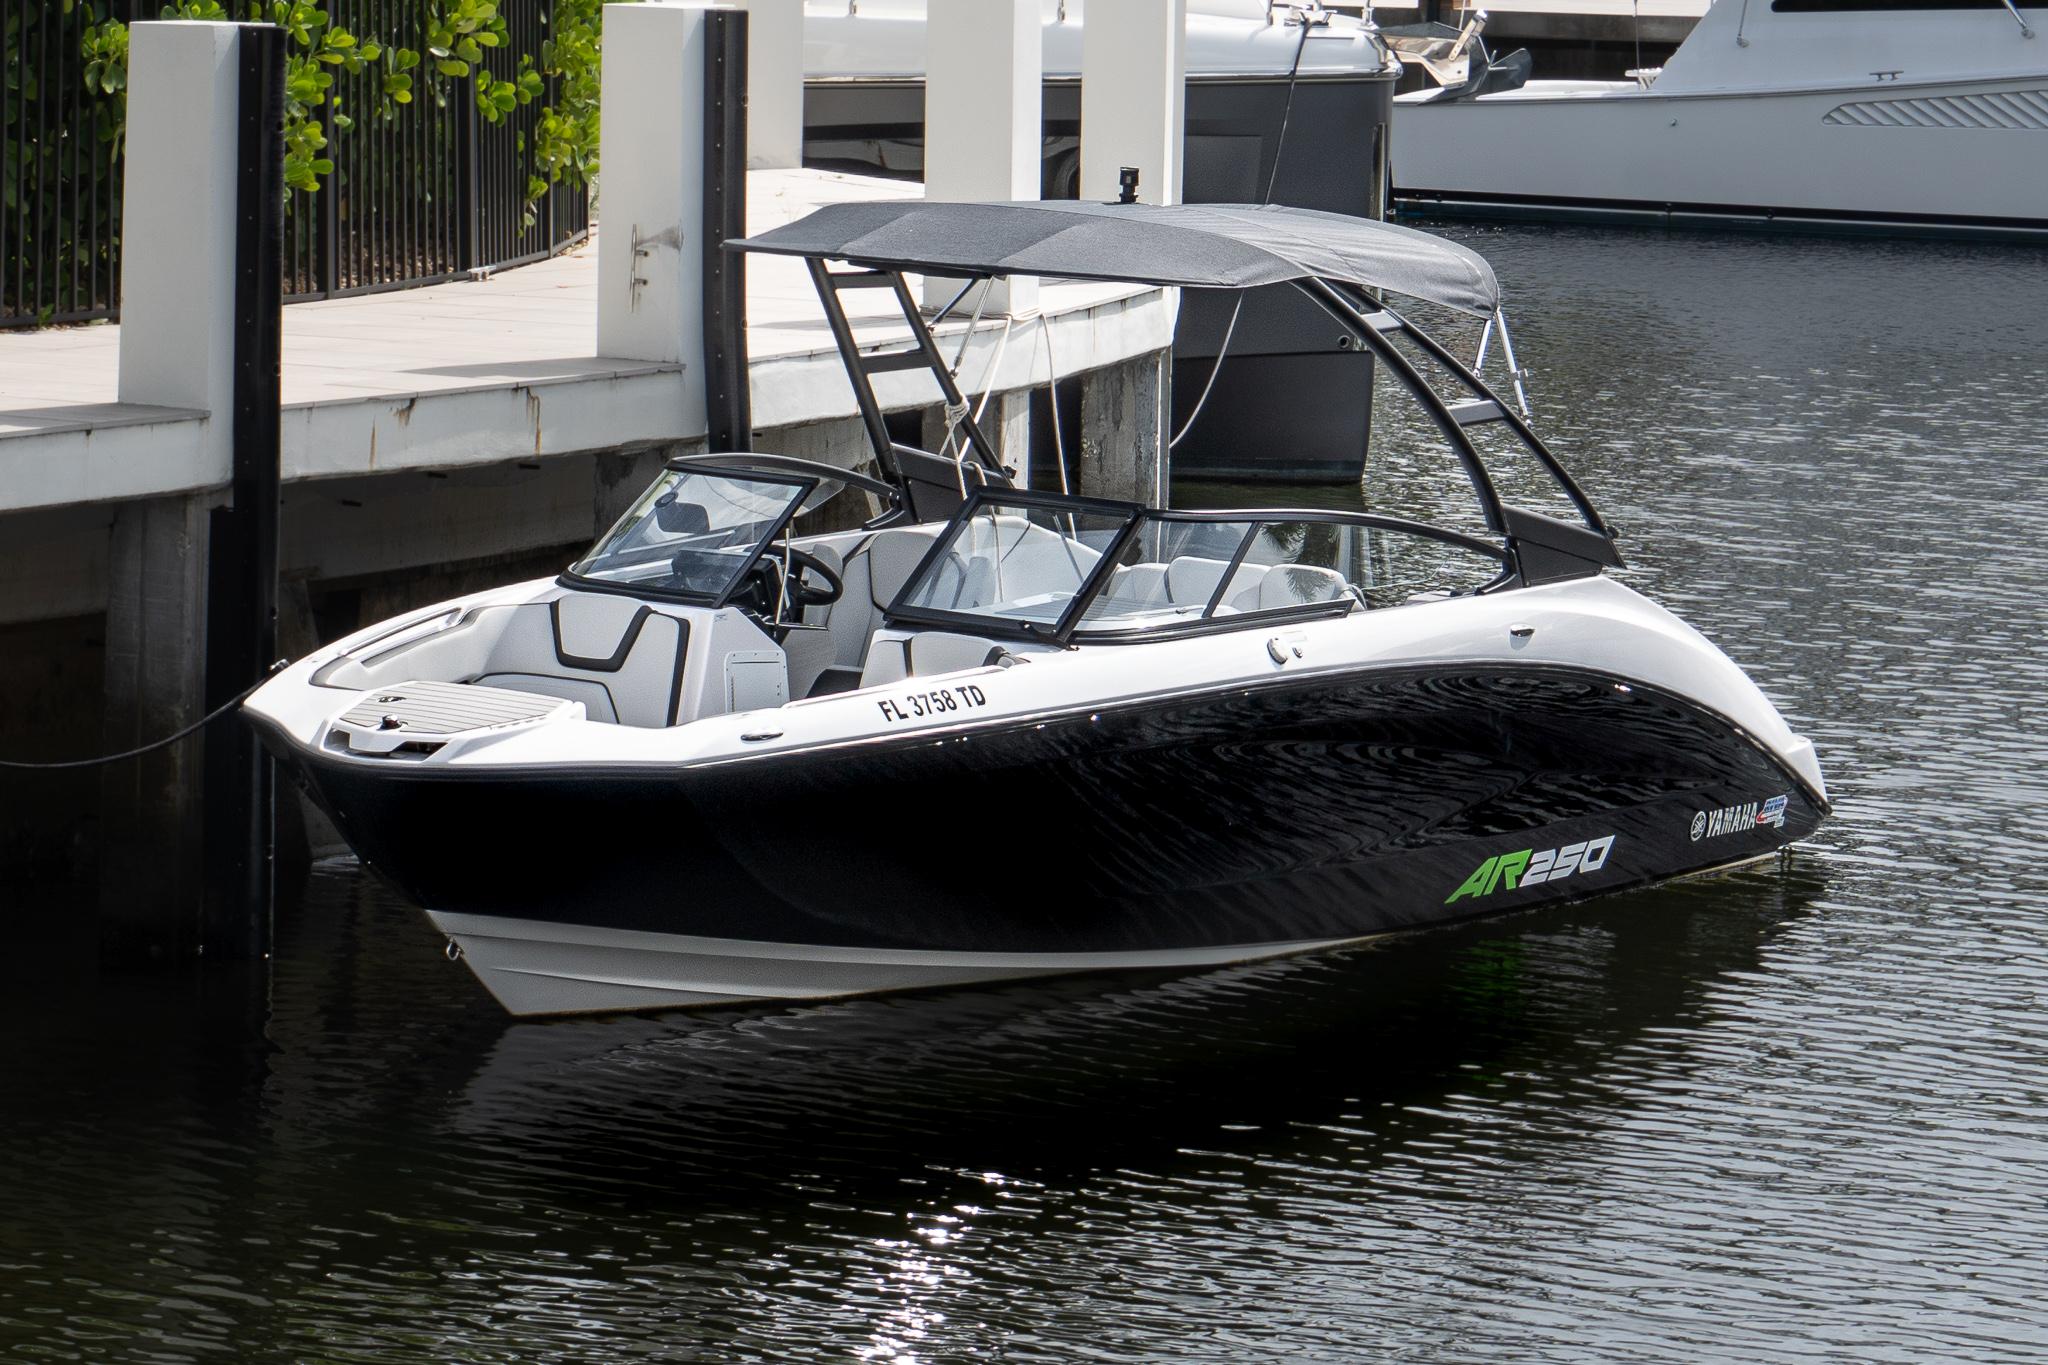 2022 Yamaha Boats AR 250